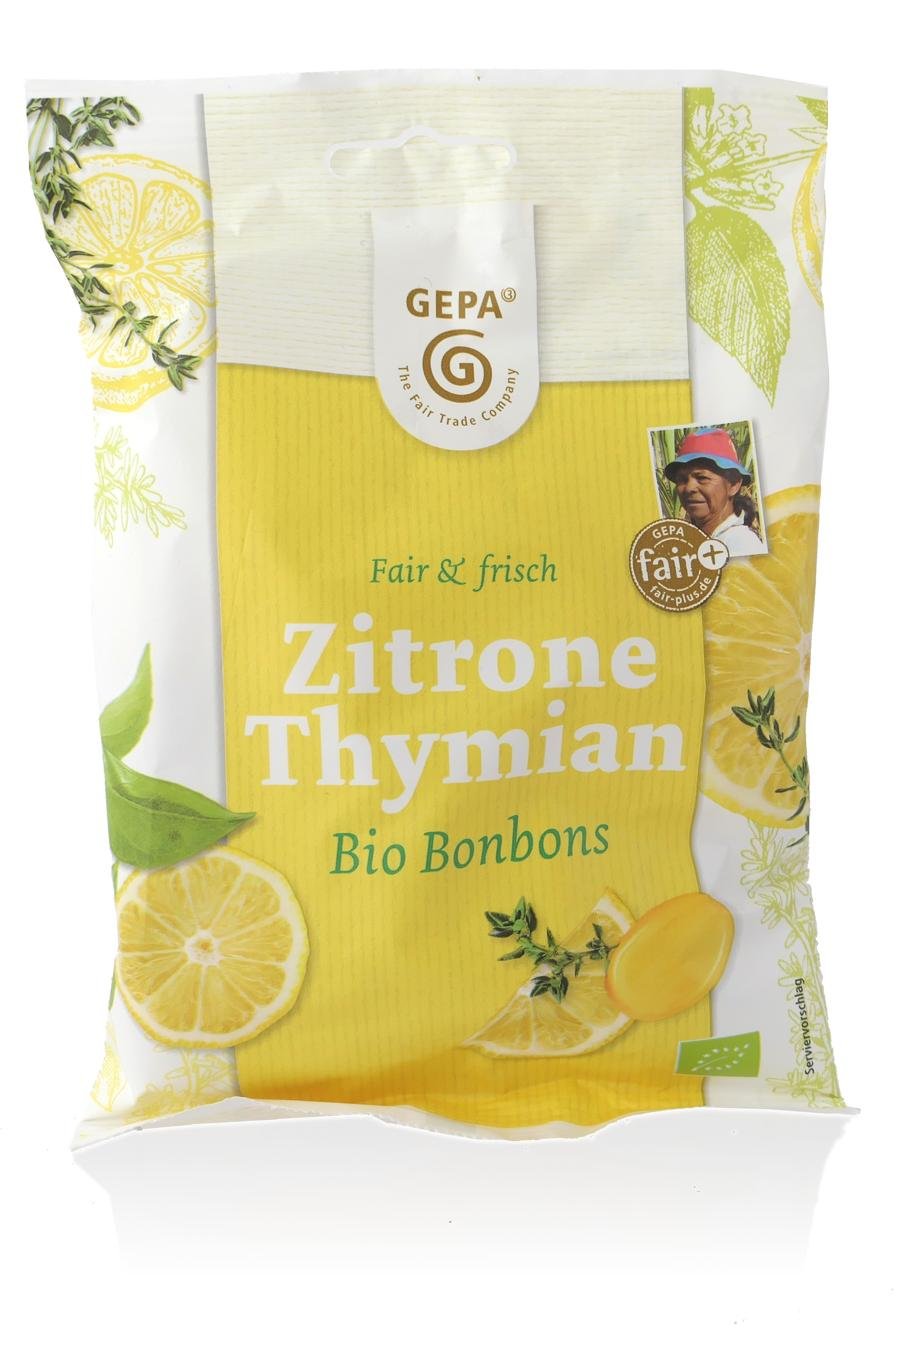 Zitrone-Thymian-Bonbons (c) M. Kerk